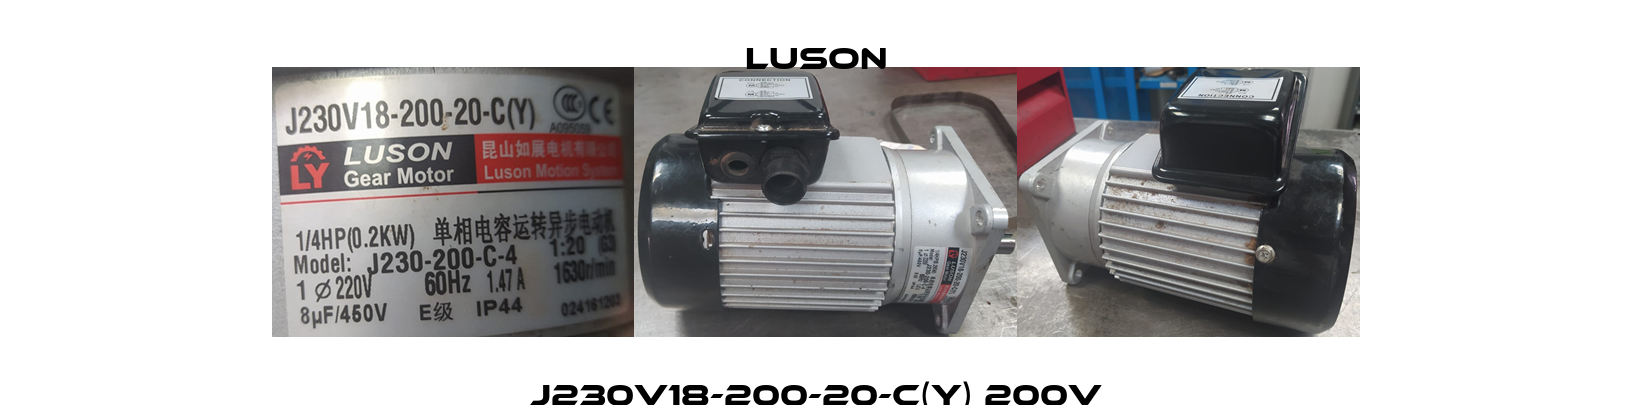 J230V18-200-20-C(Y) 200V Luson